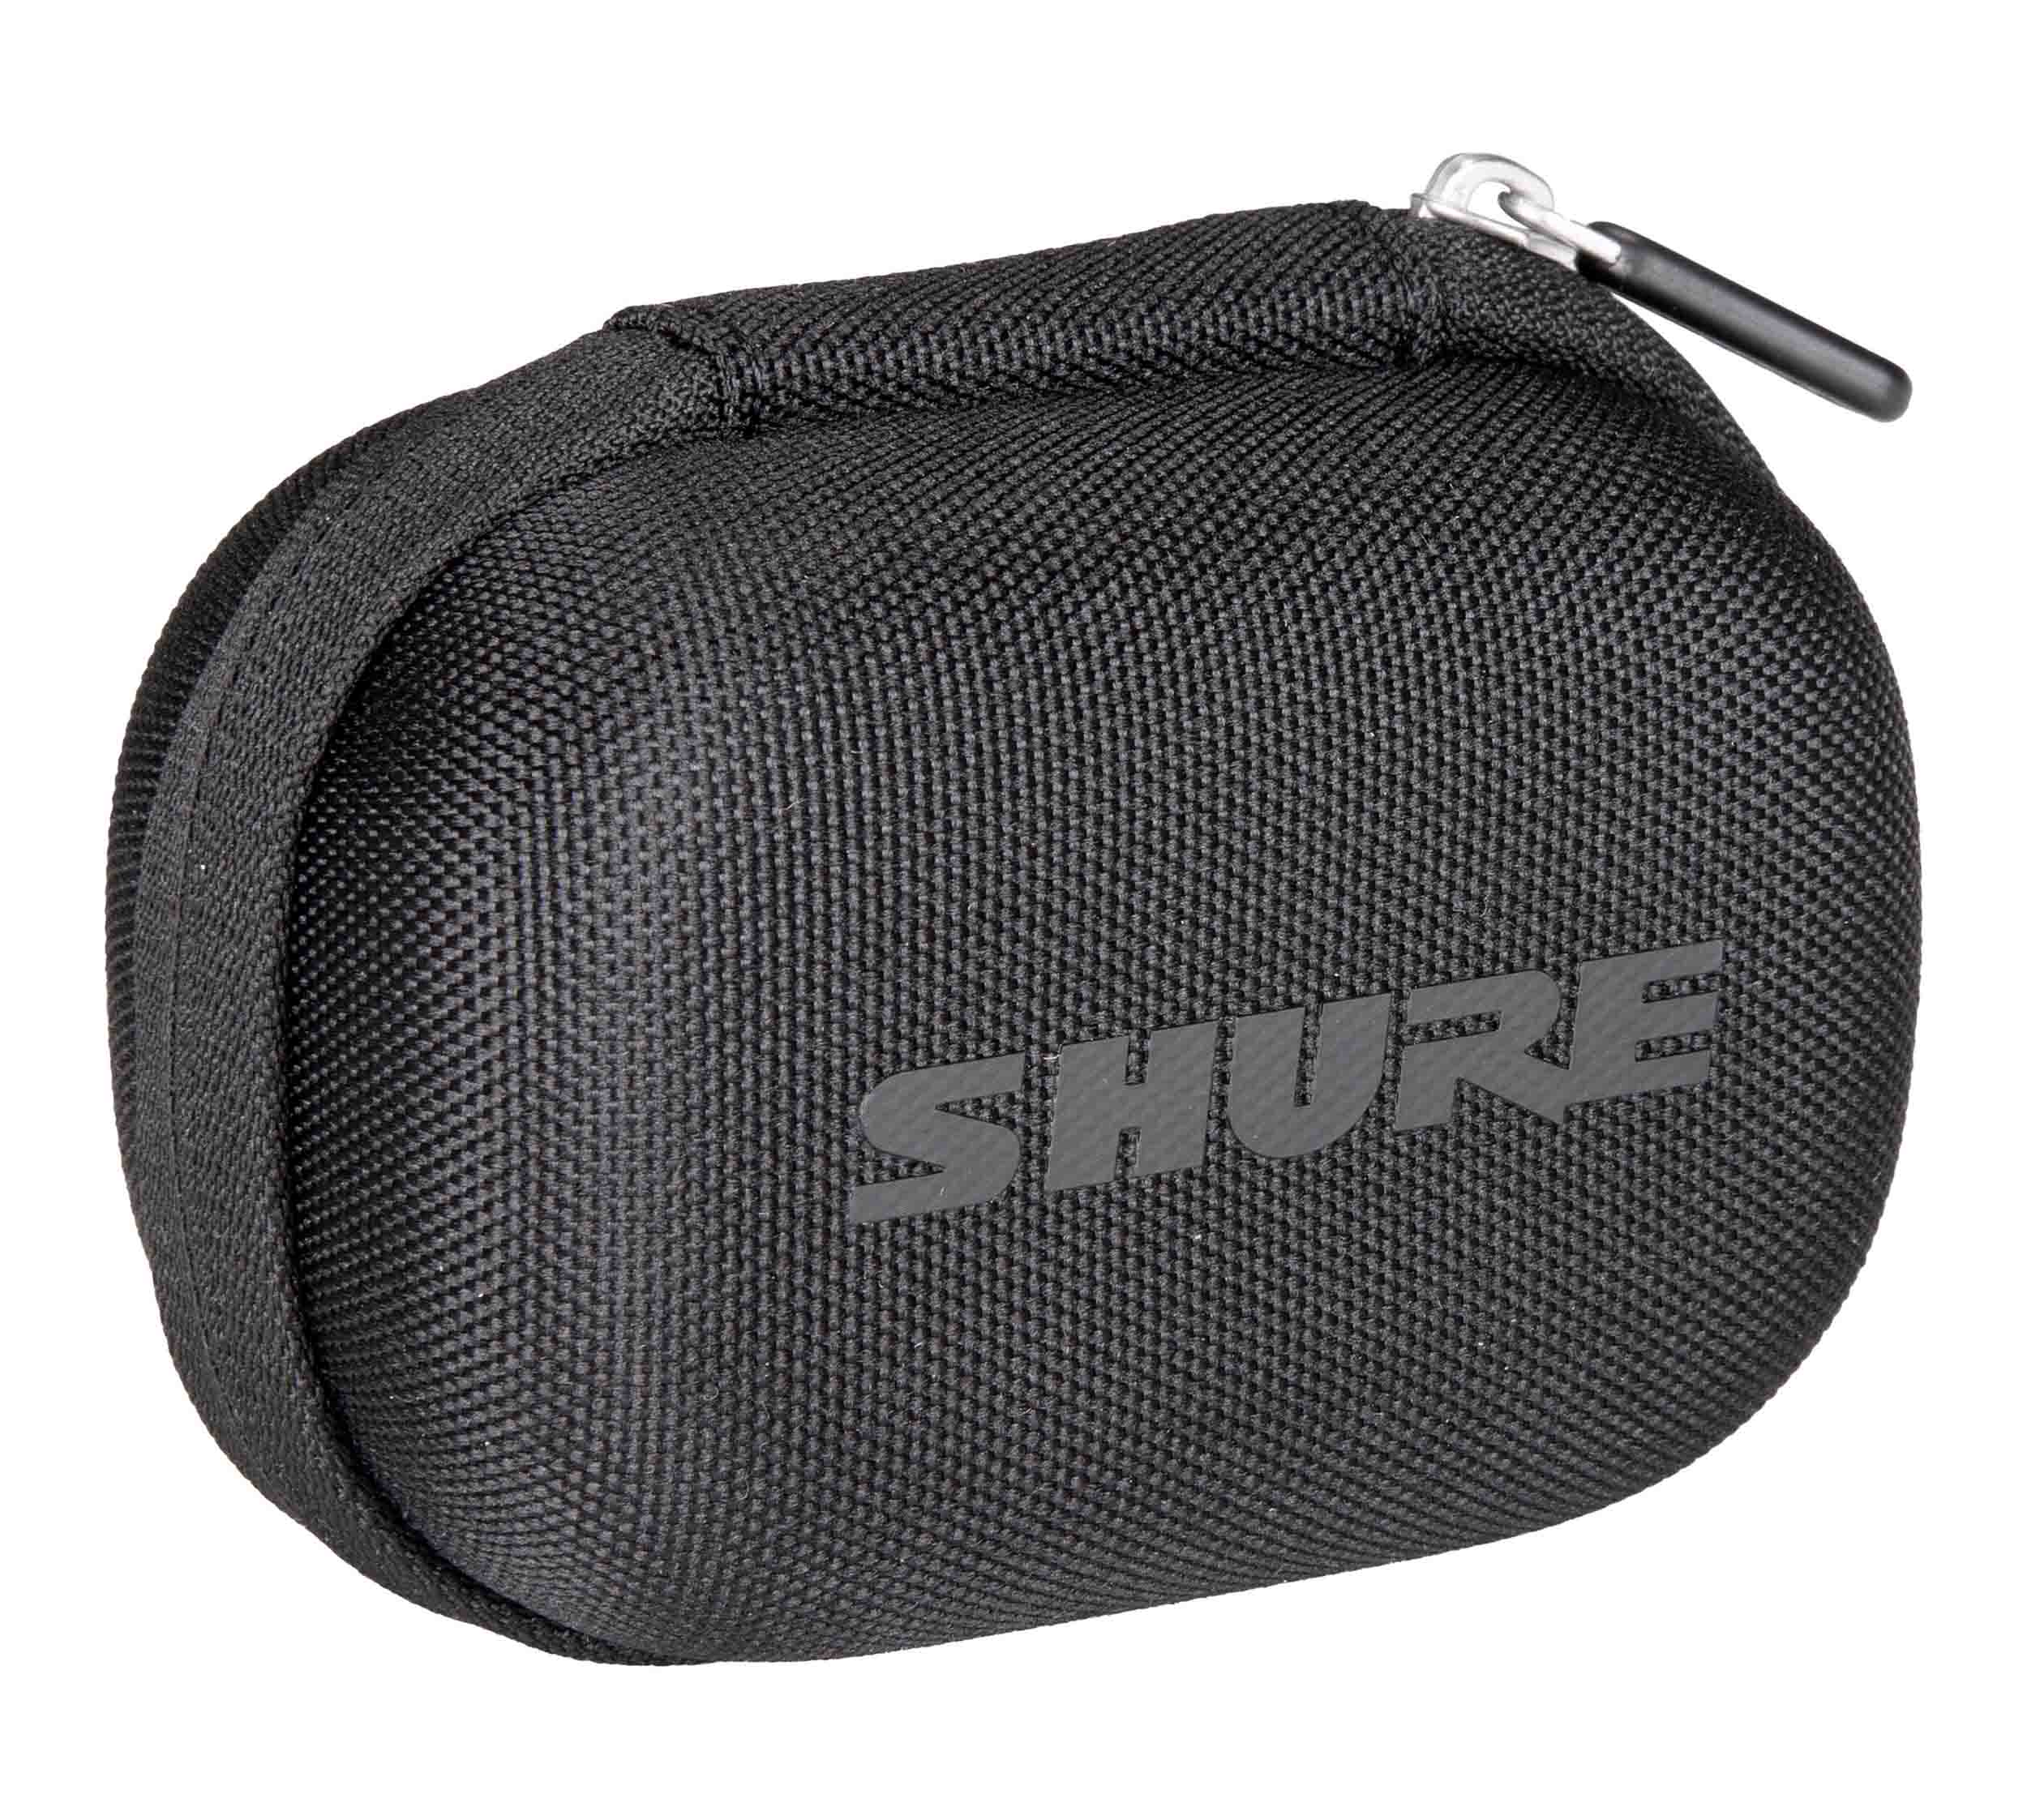 Shure ARPWC Case for Nexadyne RPW Wireless Microphone Capsule by Shure